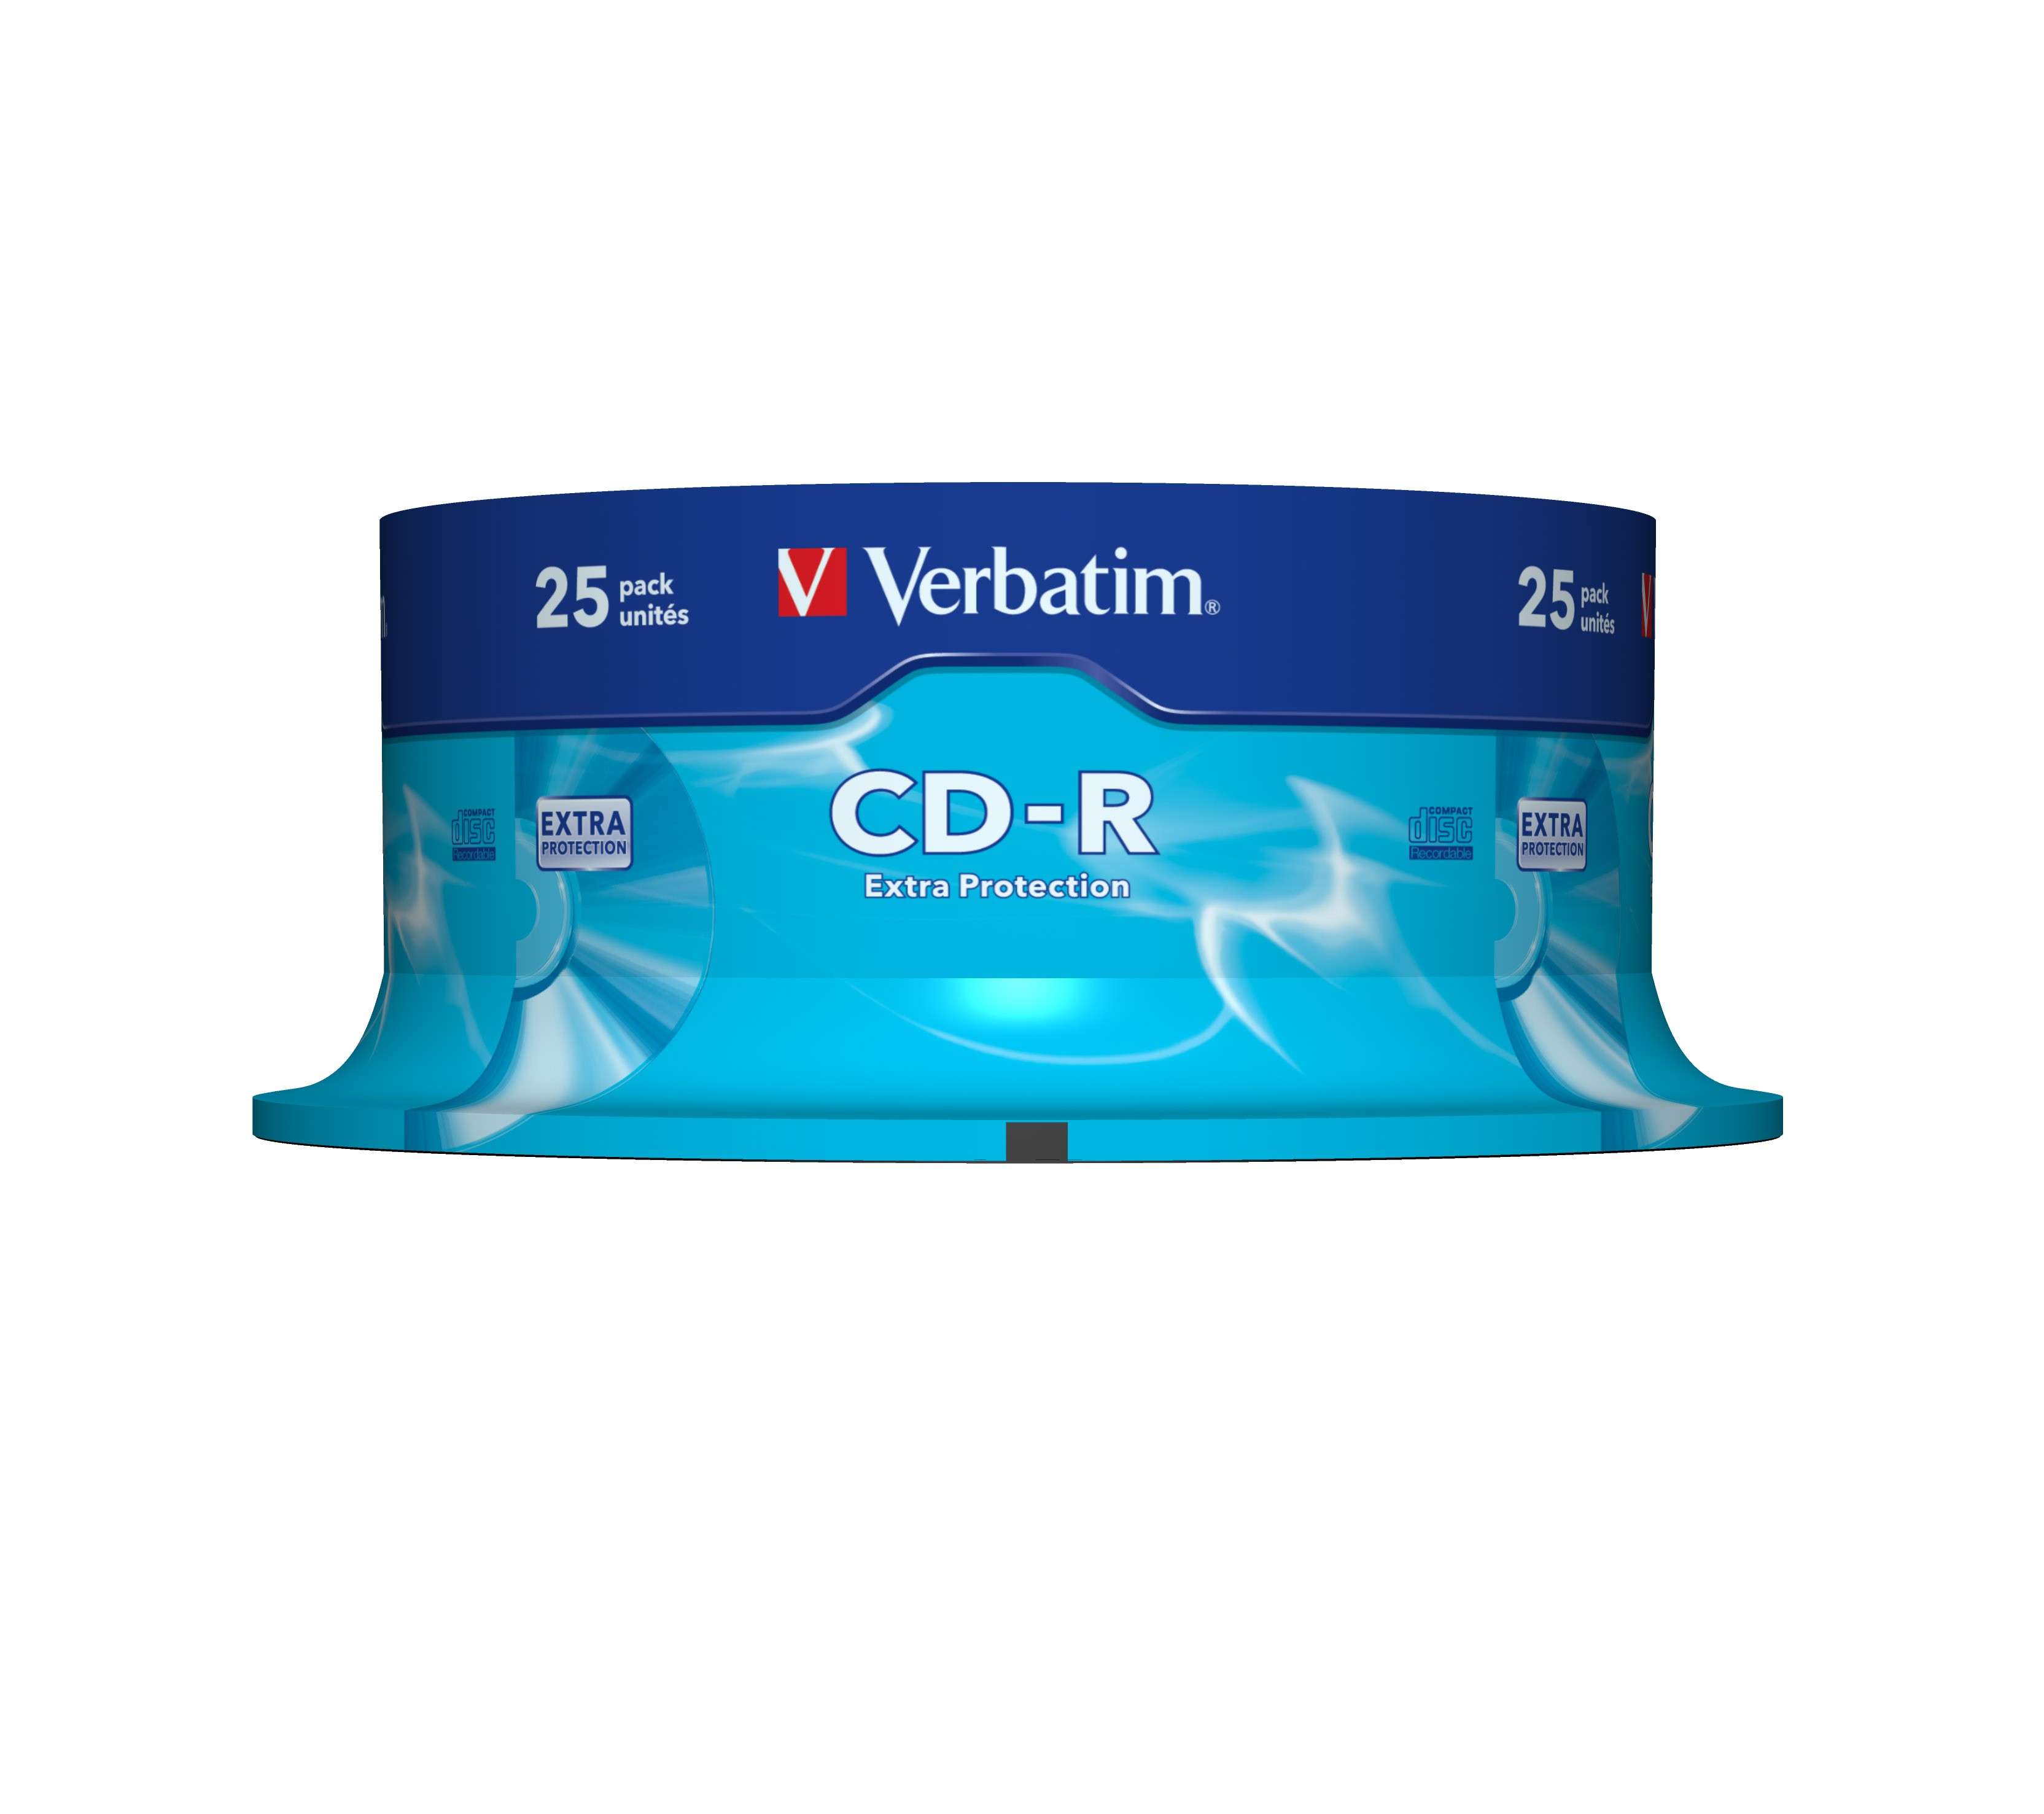 Verbatim CD-R Extra Protection - 25 x CD-R - 700 MB 52x